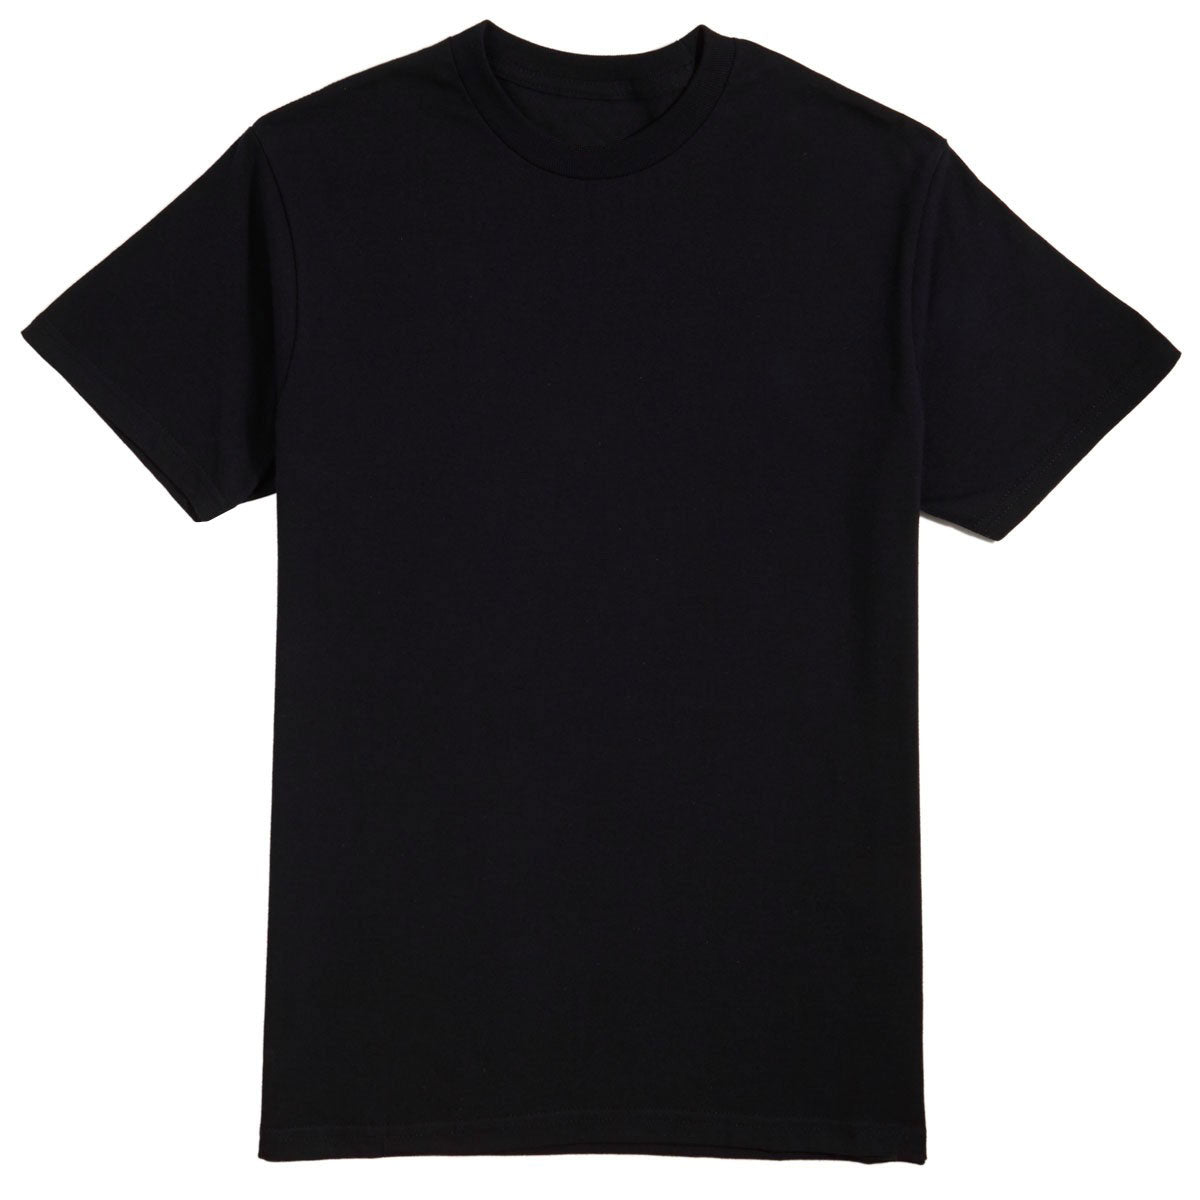 Yusuke Hanai Flash Sheet Customs X T-Shirt - Black - MD image 1